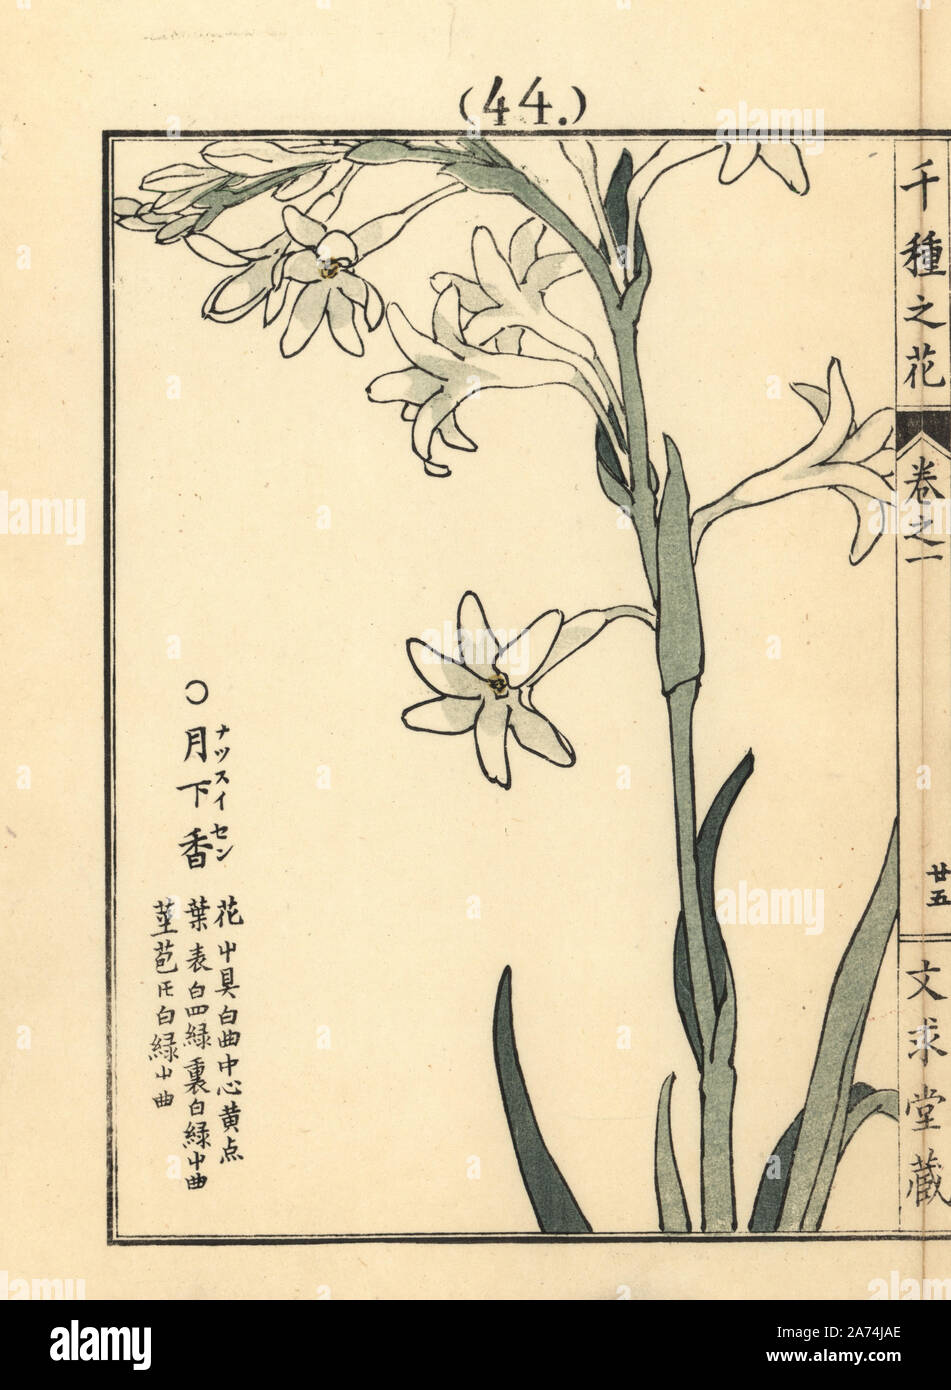 Natsuzuisen or resurrection lily, Lycoris squamigera. Handcoloured woodblock print by Kono Bairei from Senshu no Hana (One Thousand Varieties of Flowers), Bunkyudo, Kyoto, 1900. Stock Photo